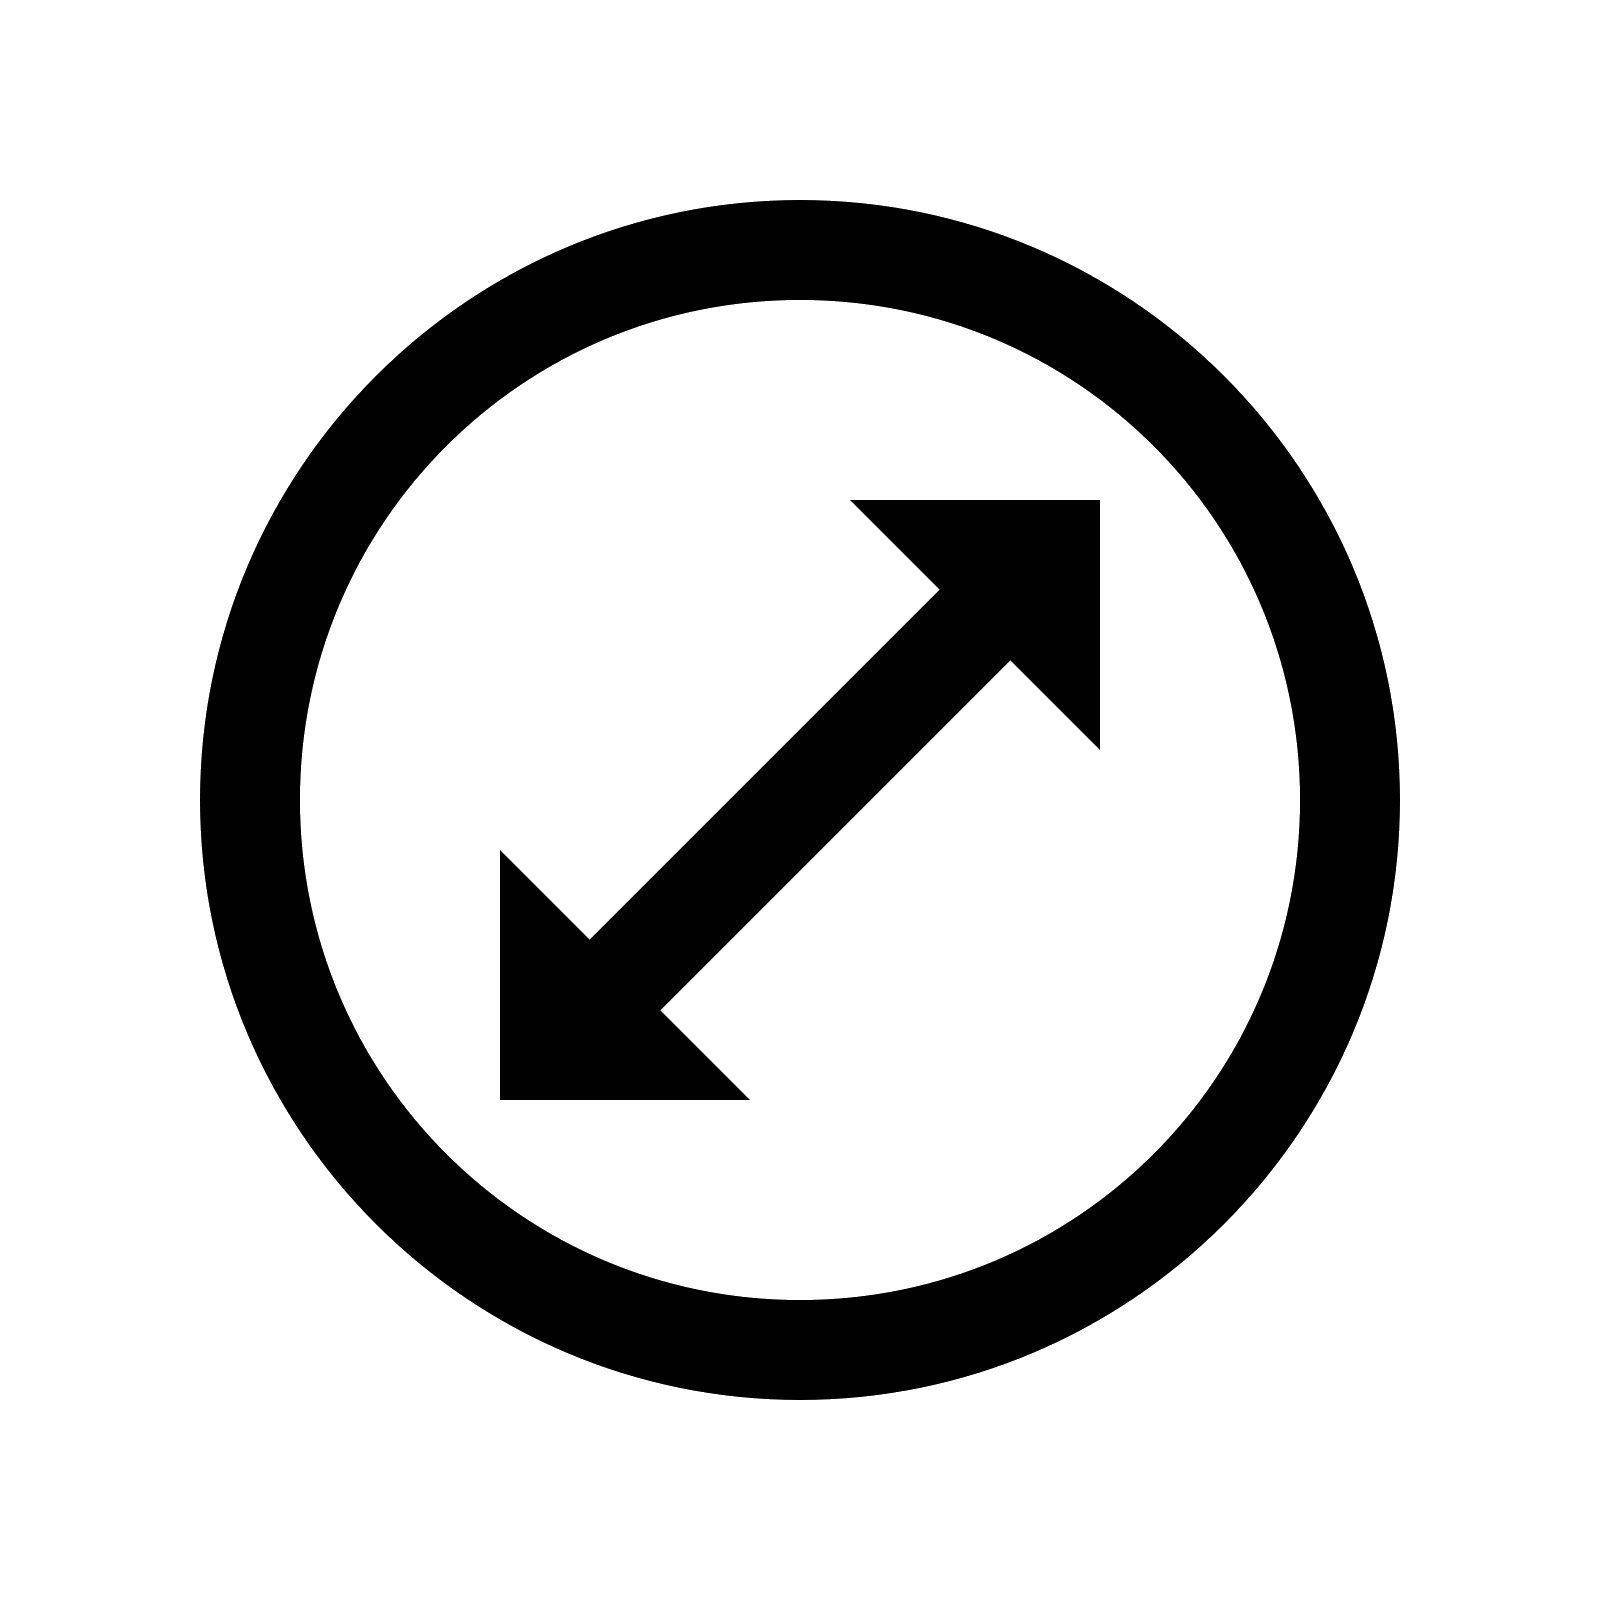 Обозначение диаметра символ. Значок диаметра. Диаметр иконка. Значок радиуса. Символ диаметра иконка.